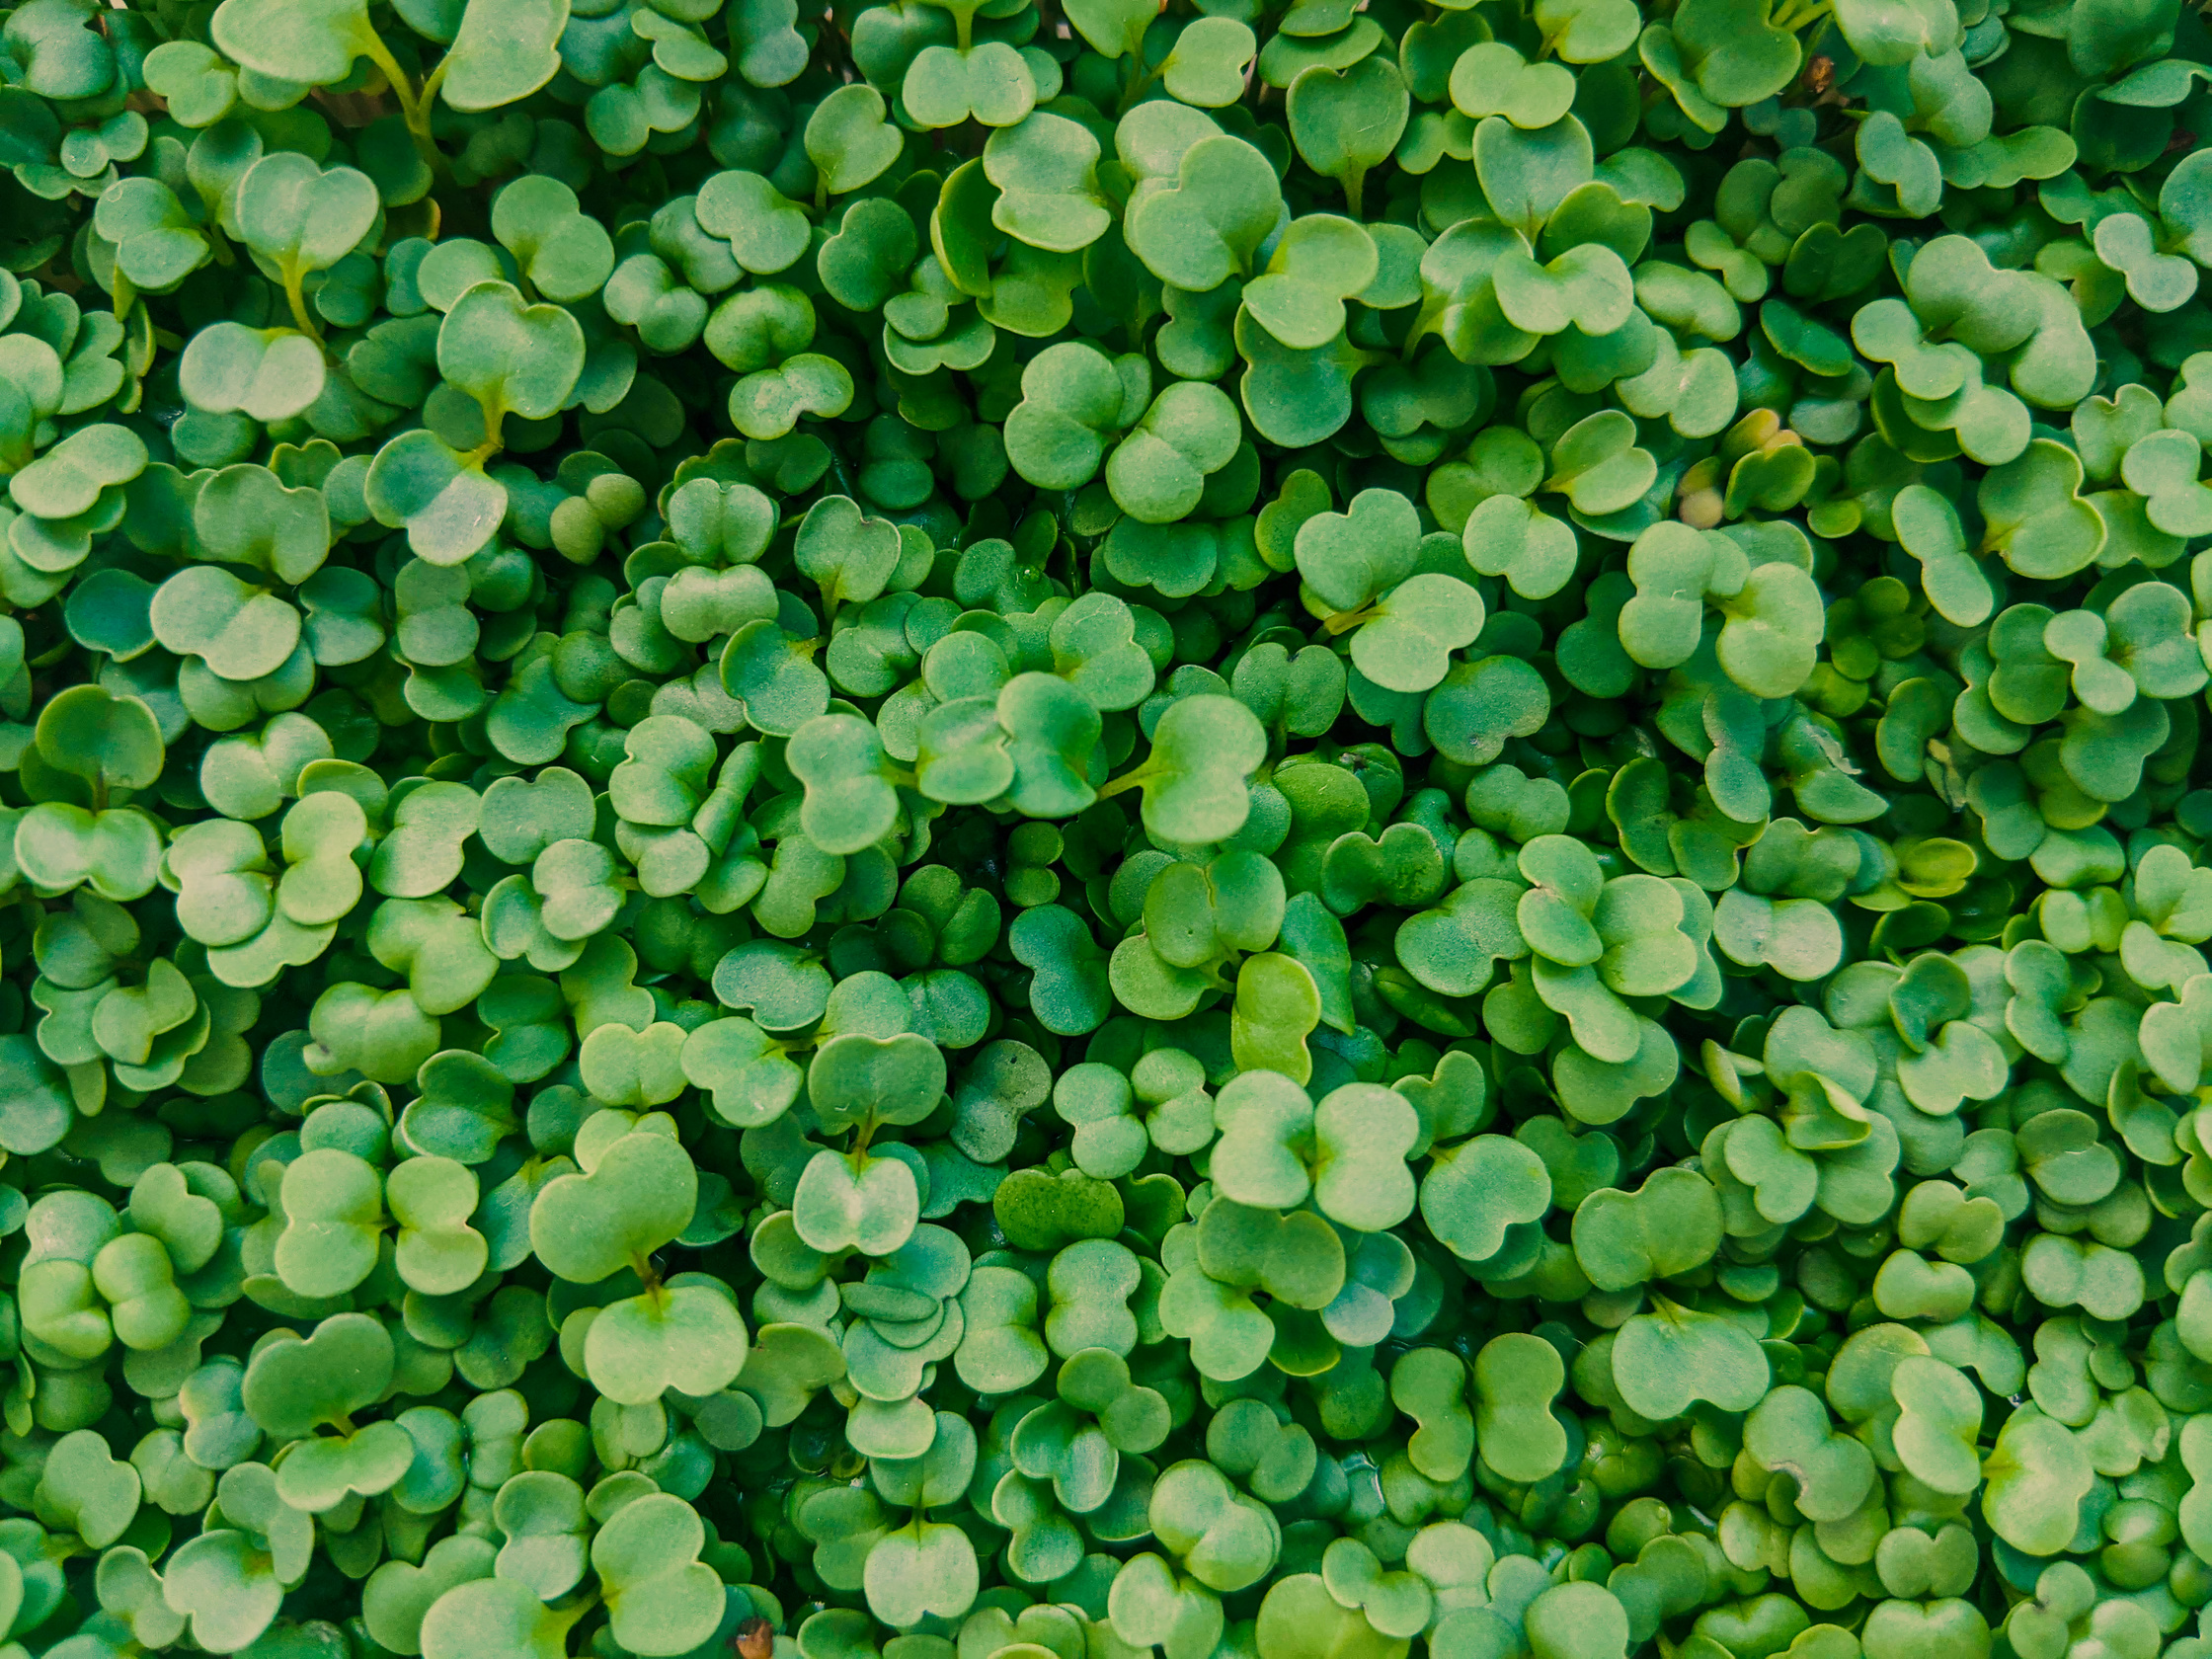 Green bush with arugula microgreens